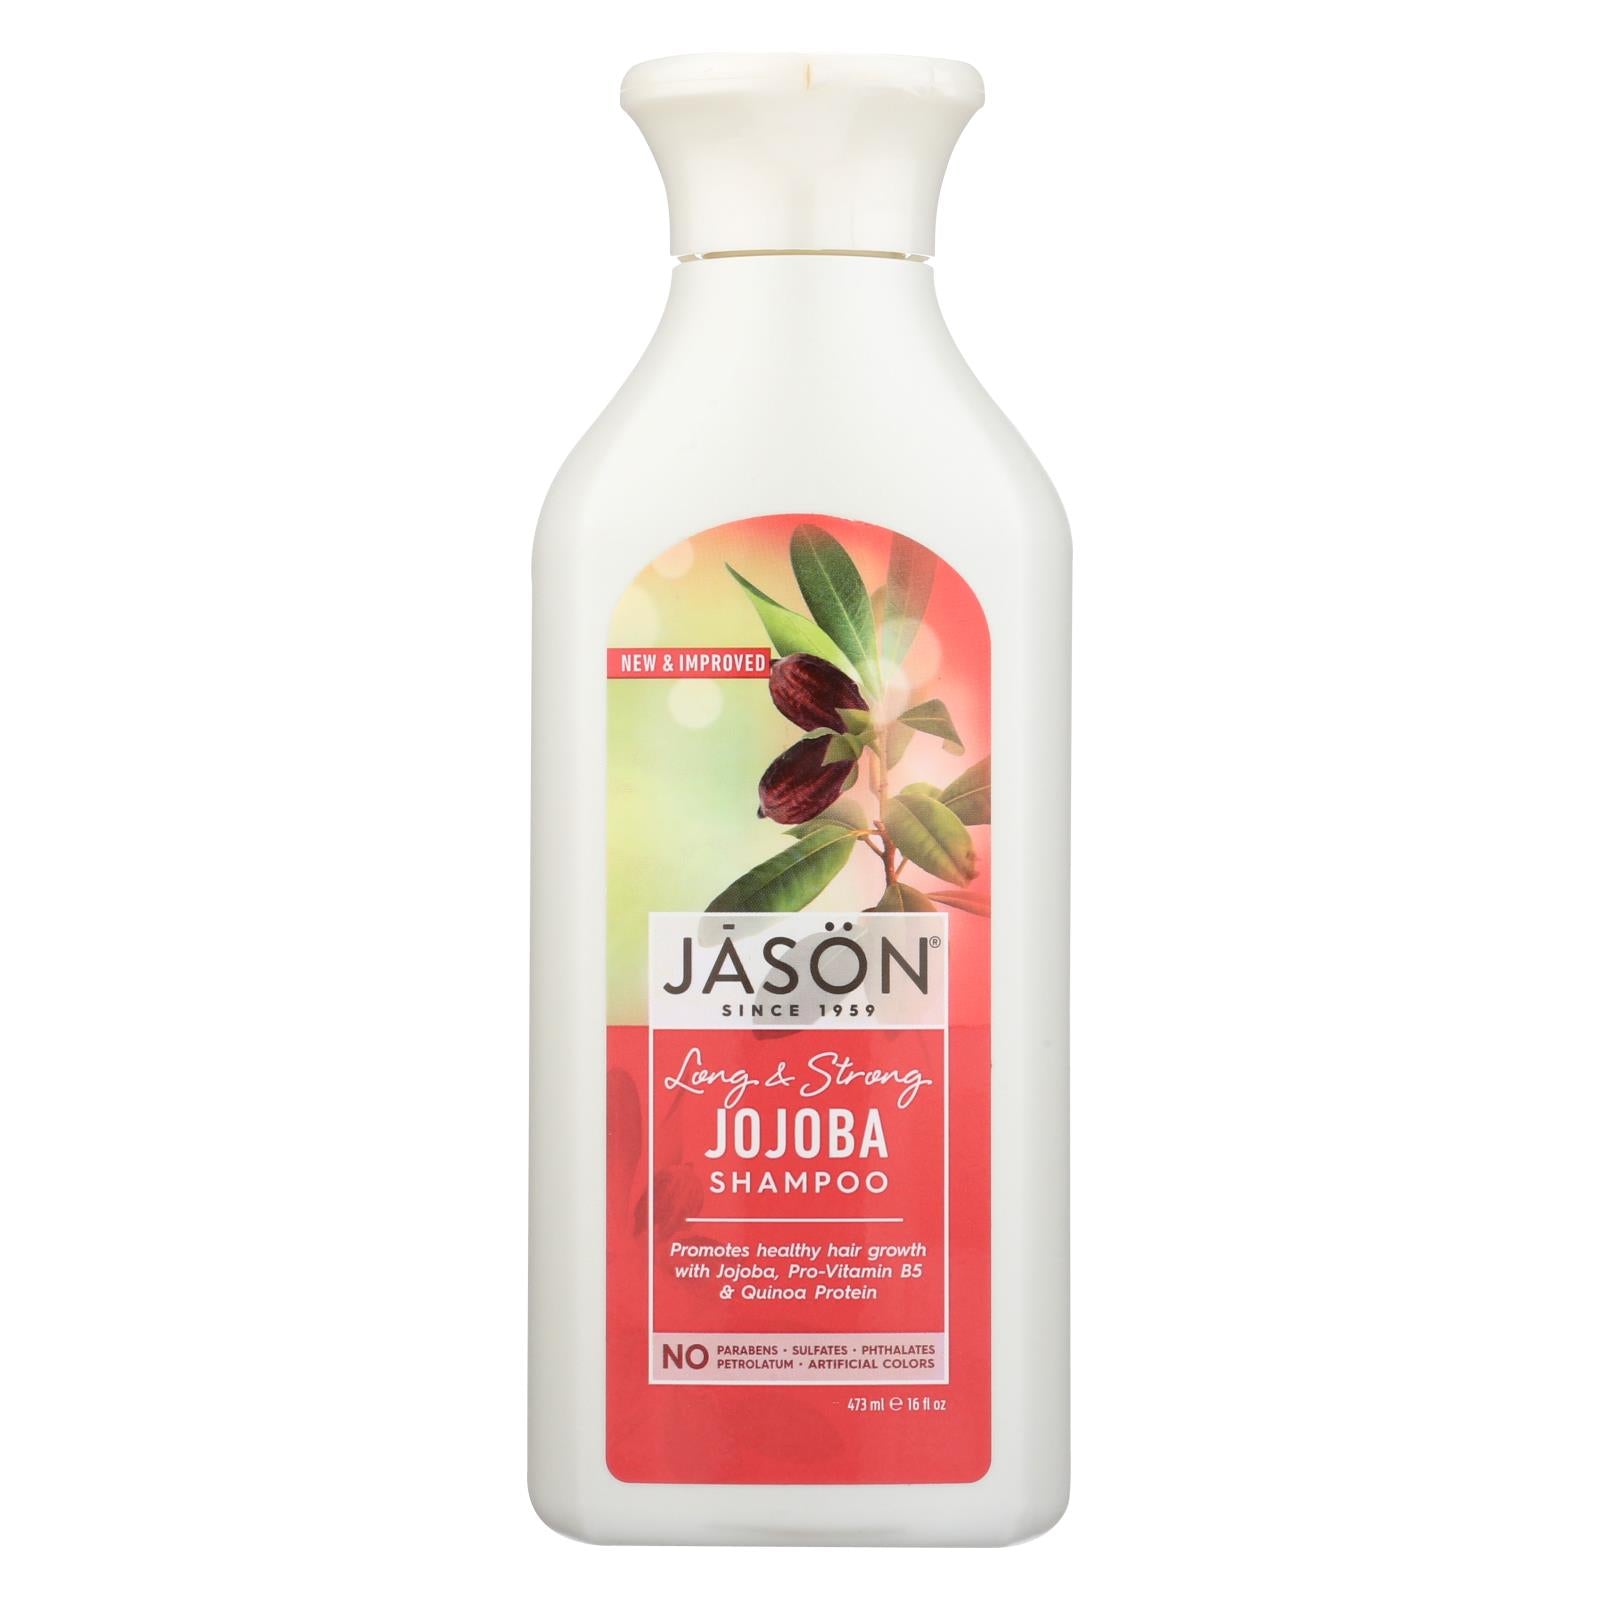 Jason Natural Products Pure Natural Shampoo, Long and Strong Jojoba, 16 Fluid Ounce